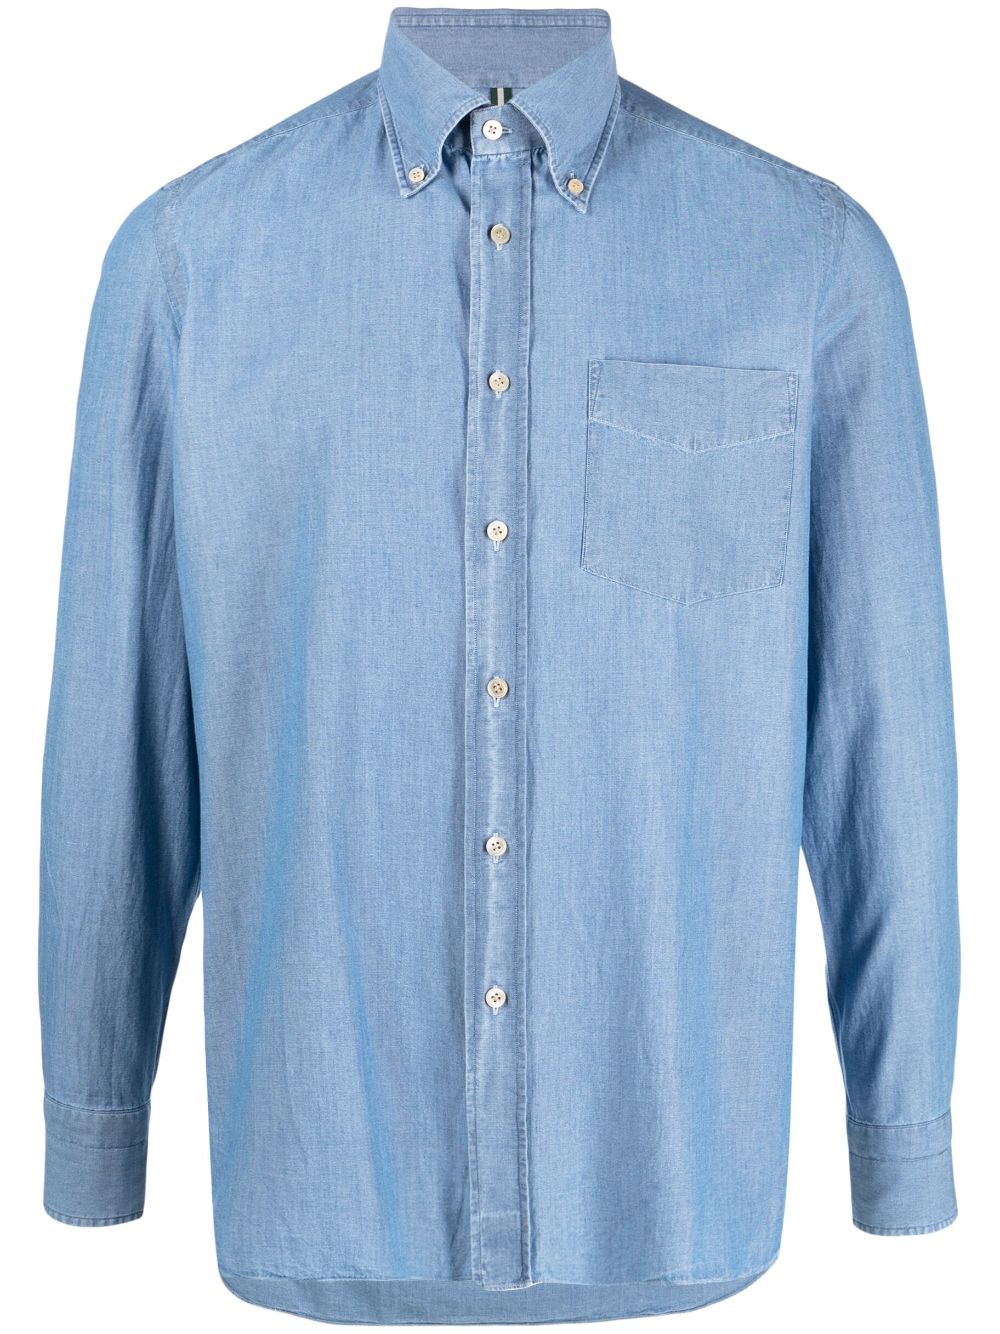 chest-pocket cotton shirt